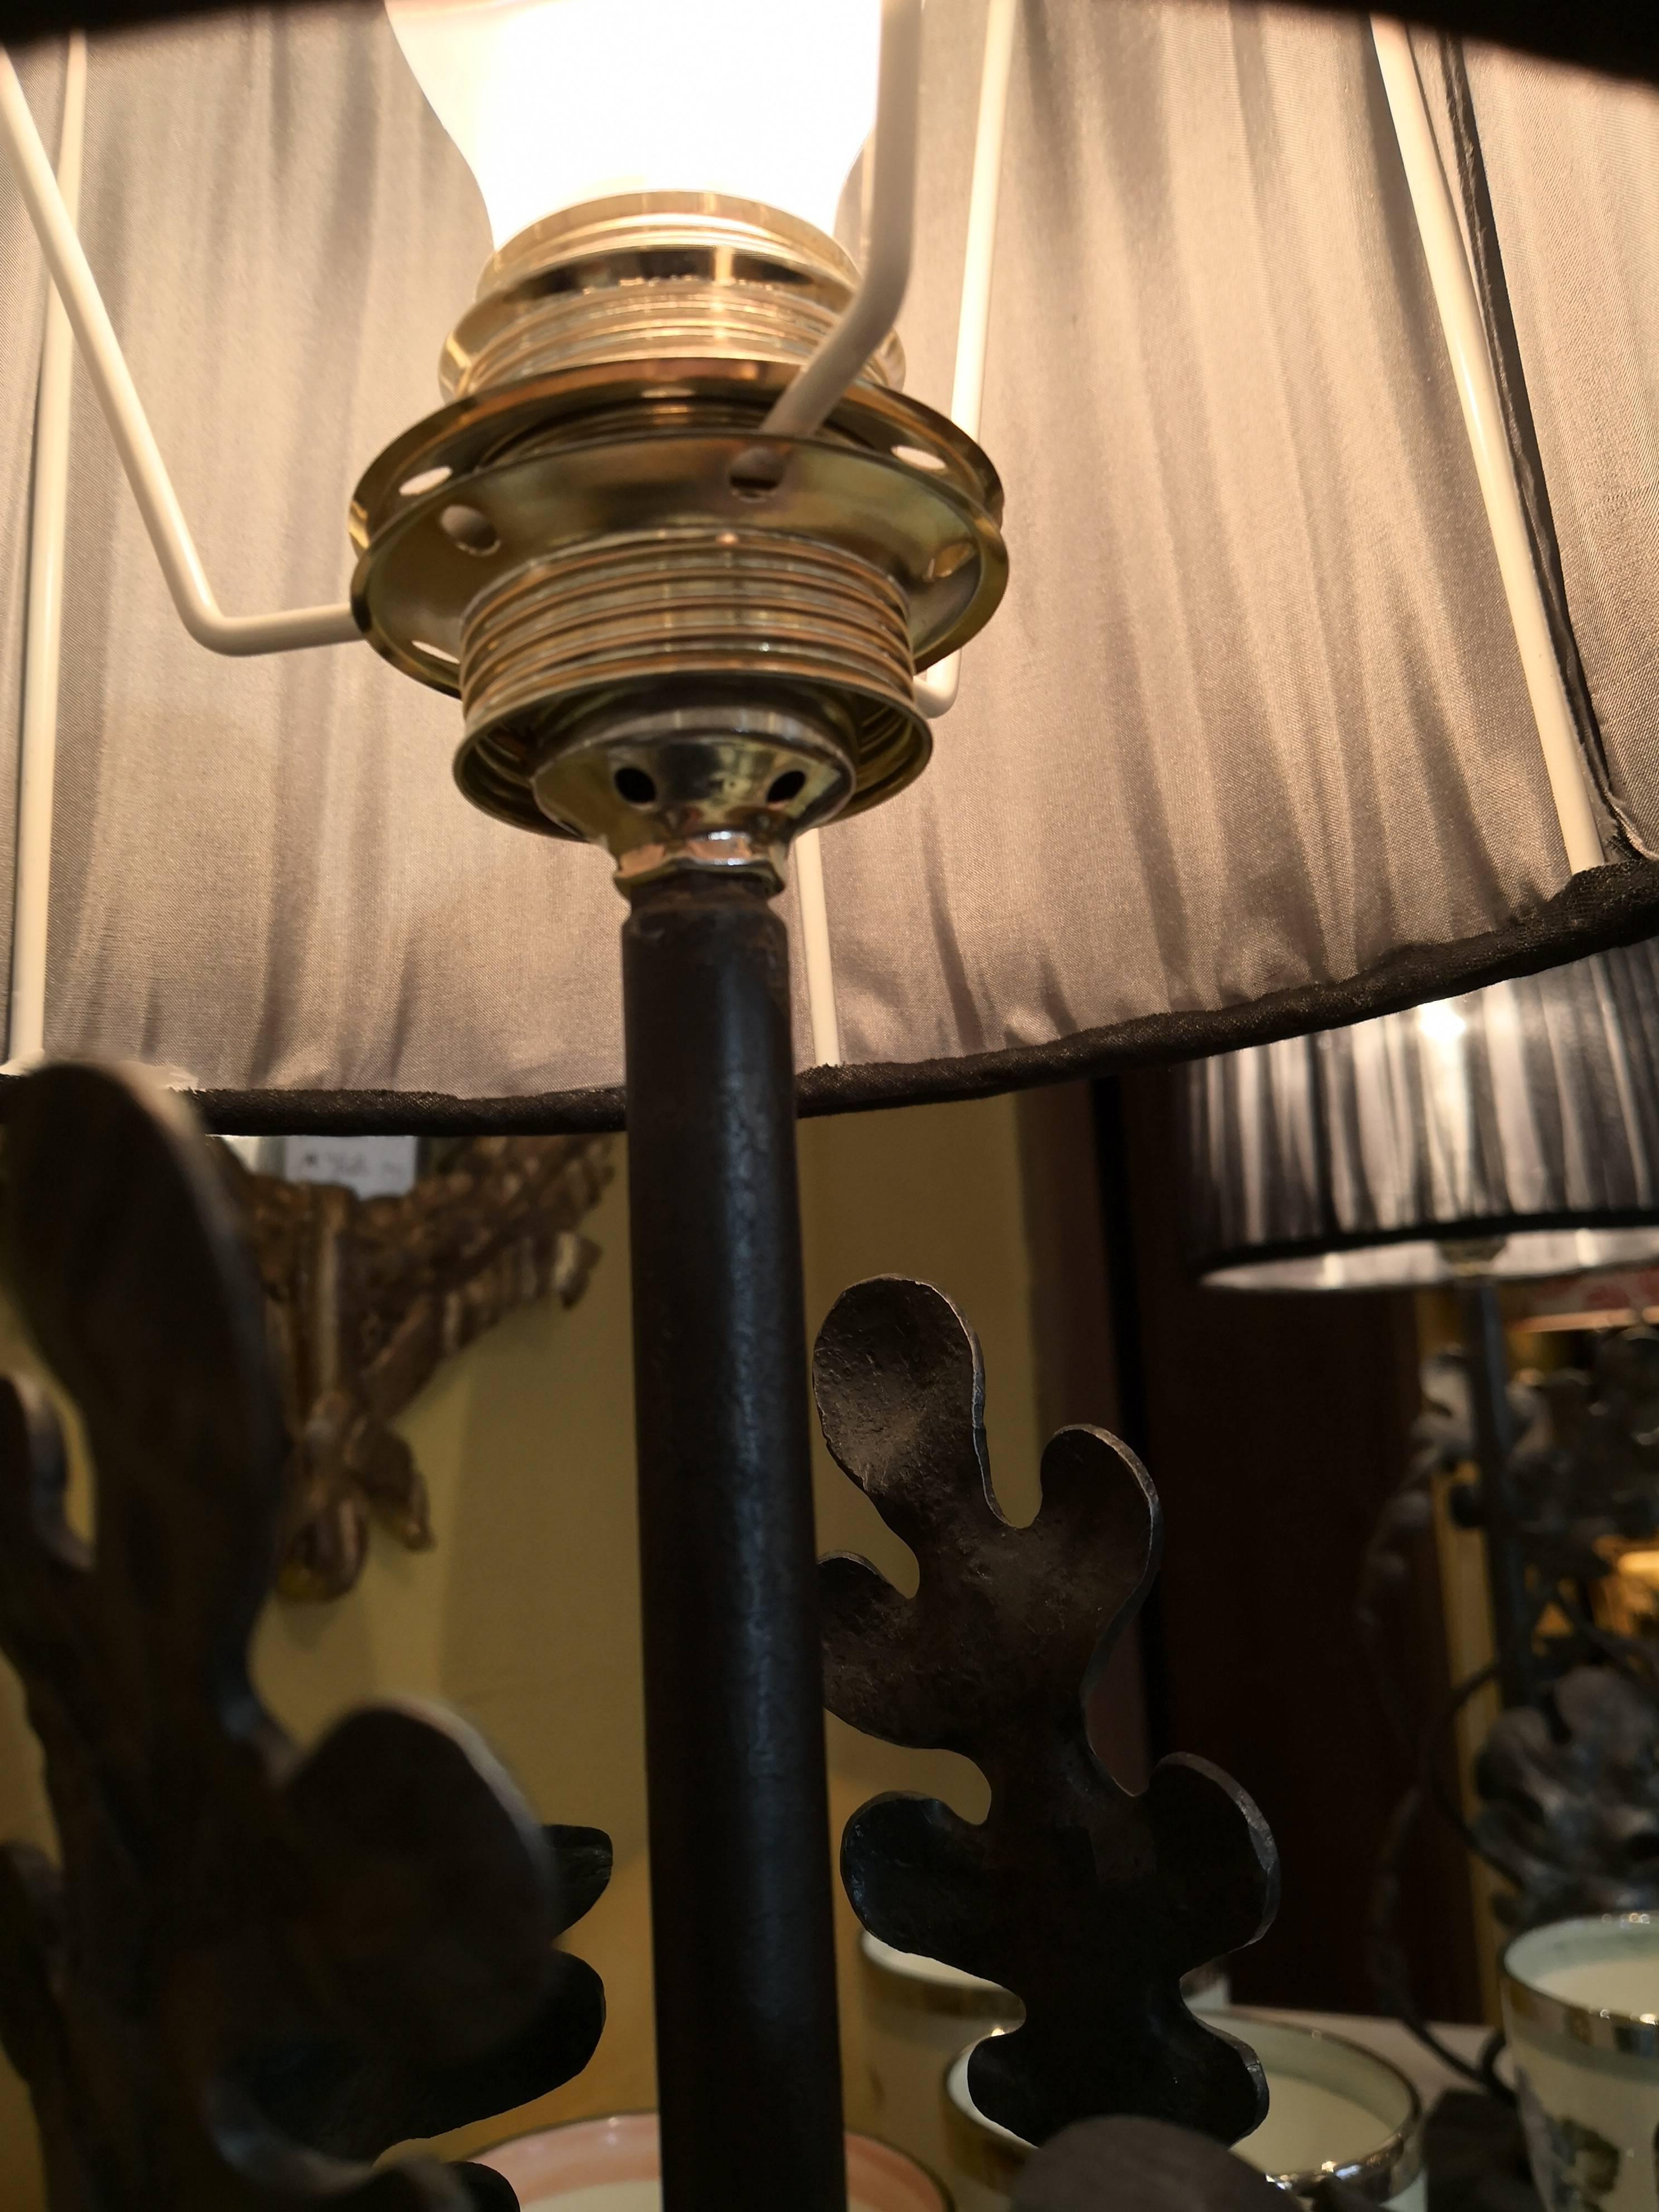  Pair of Iron Table Lamps Handmade Austria with Black Organza Shades (Handgefertigt)